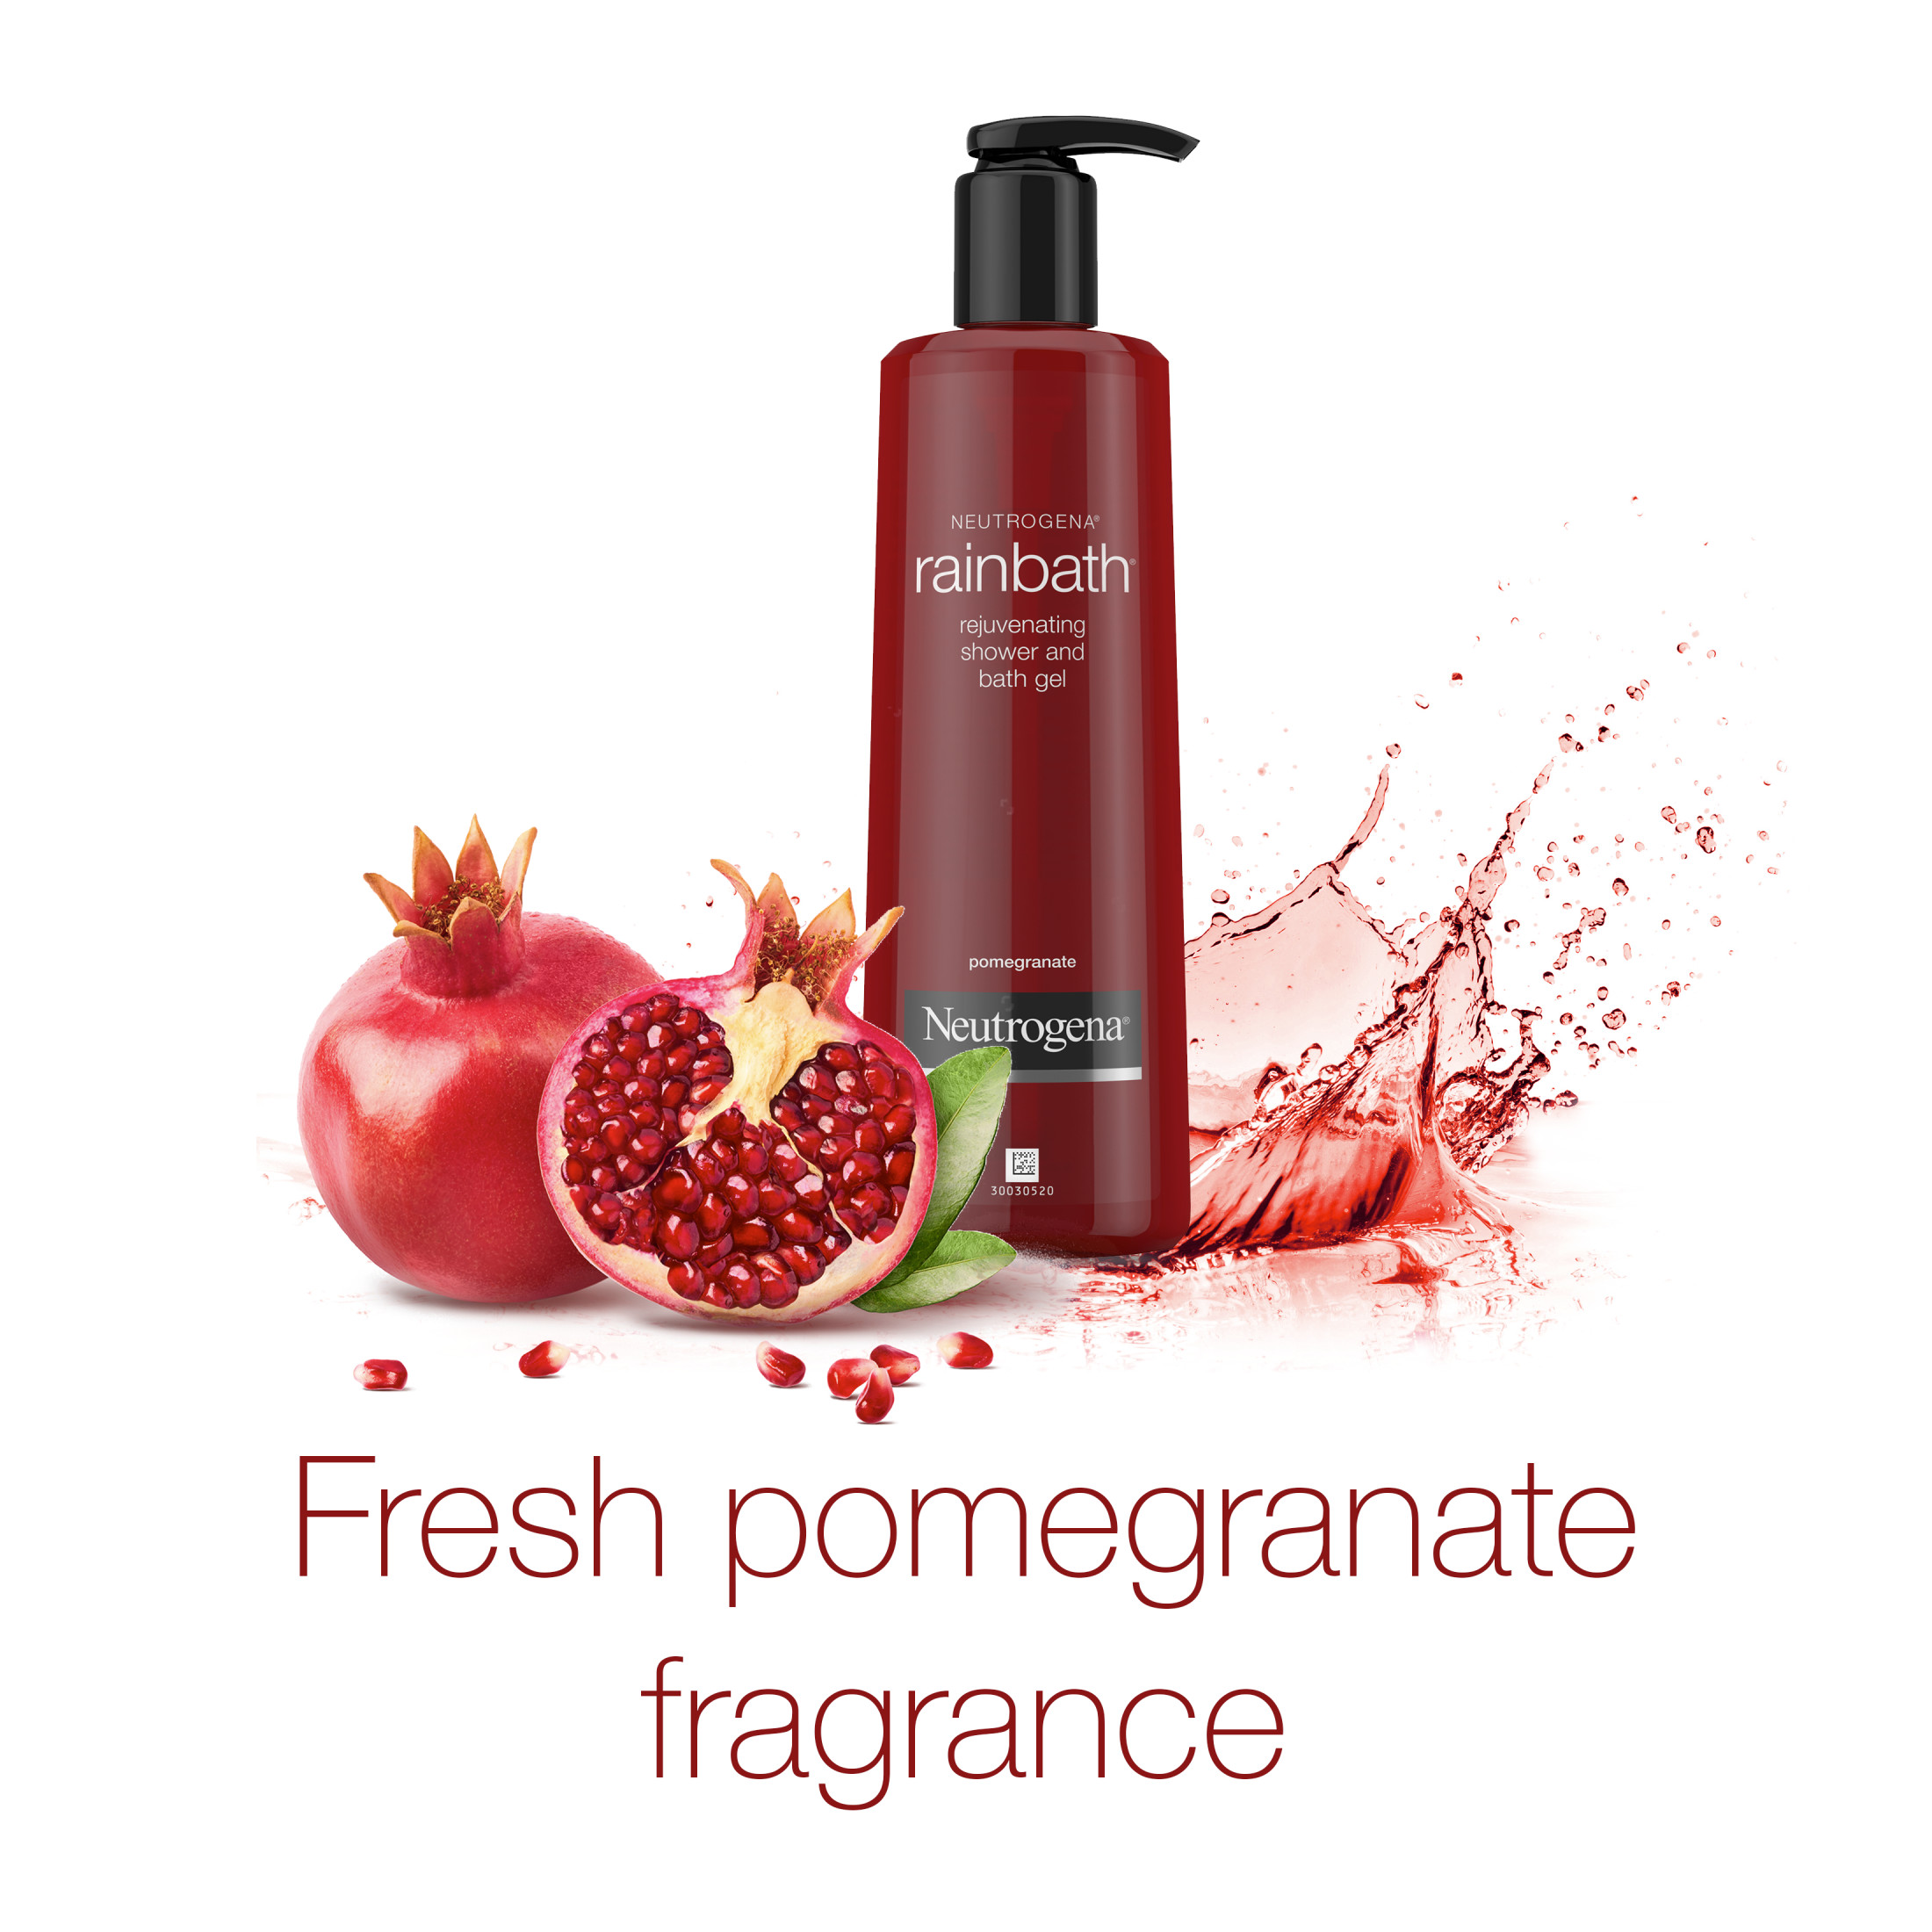 Neutrogena Rainbath Rejuvenating Shower/Bath Gel, Pomegranate, 16 oz - image 5 of 12